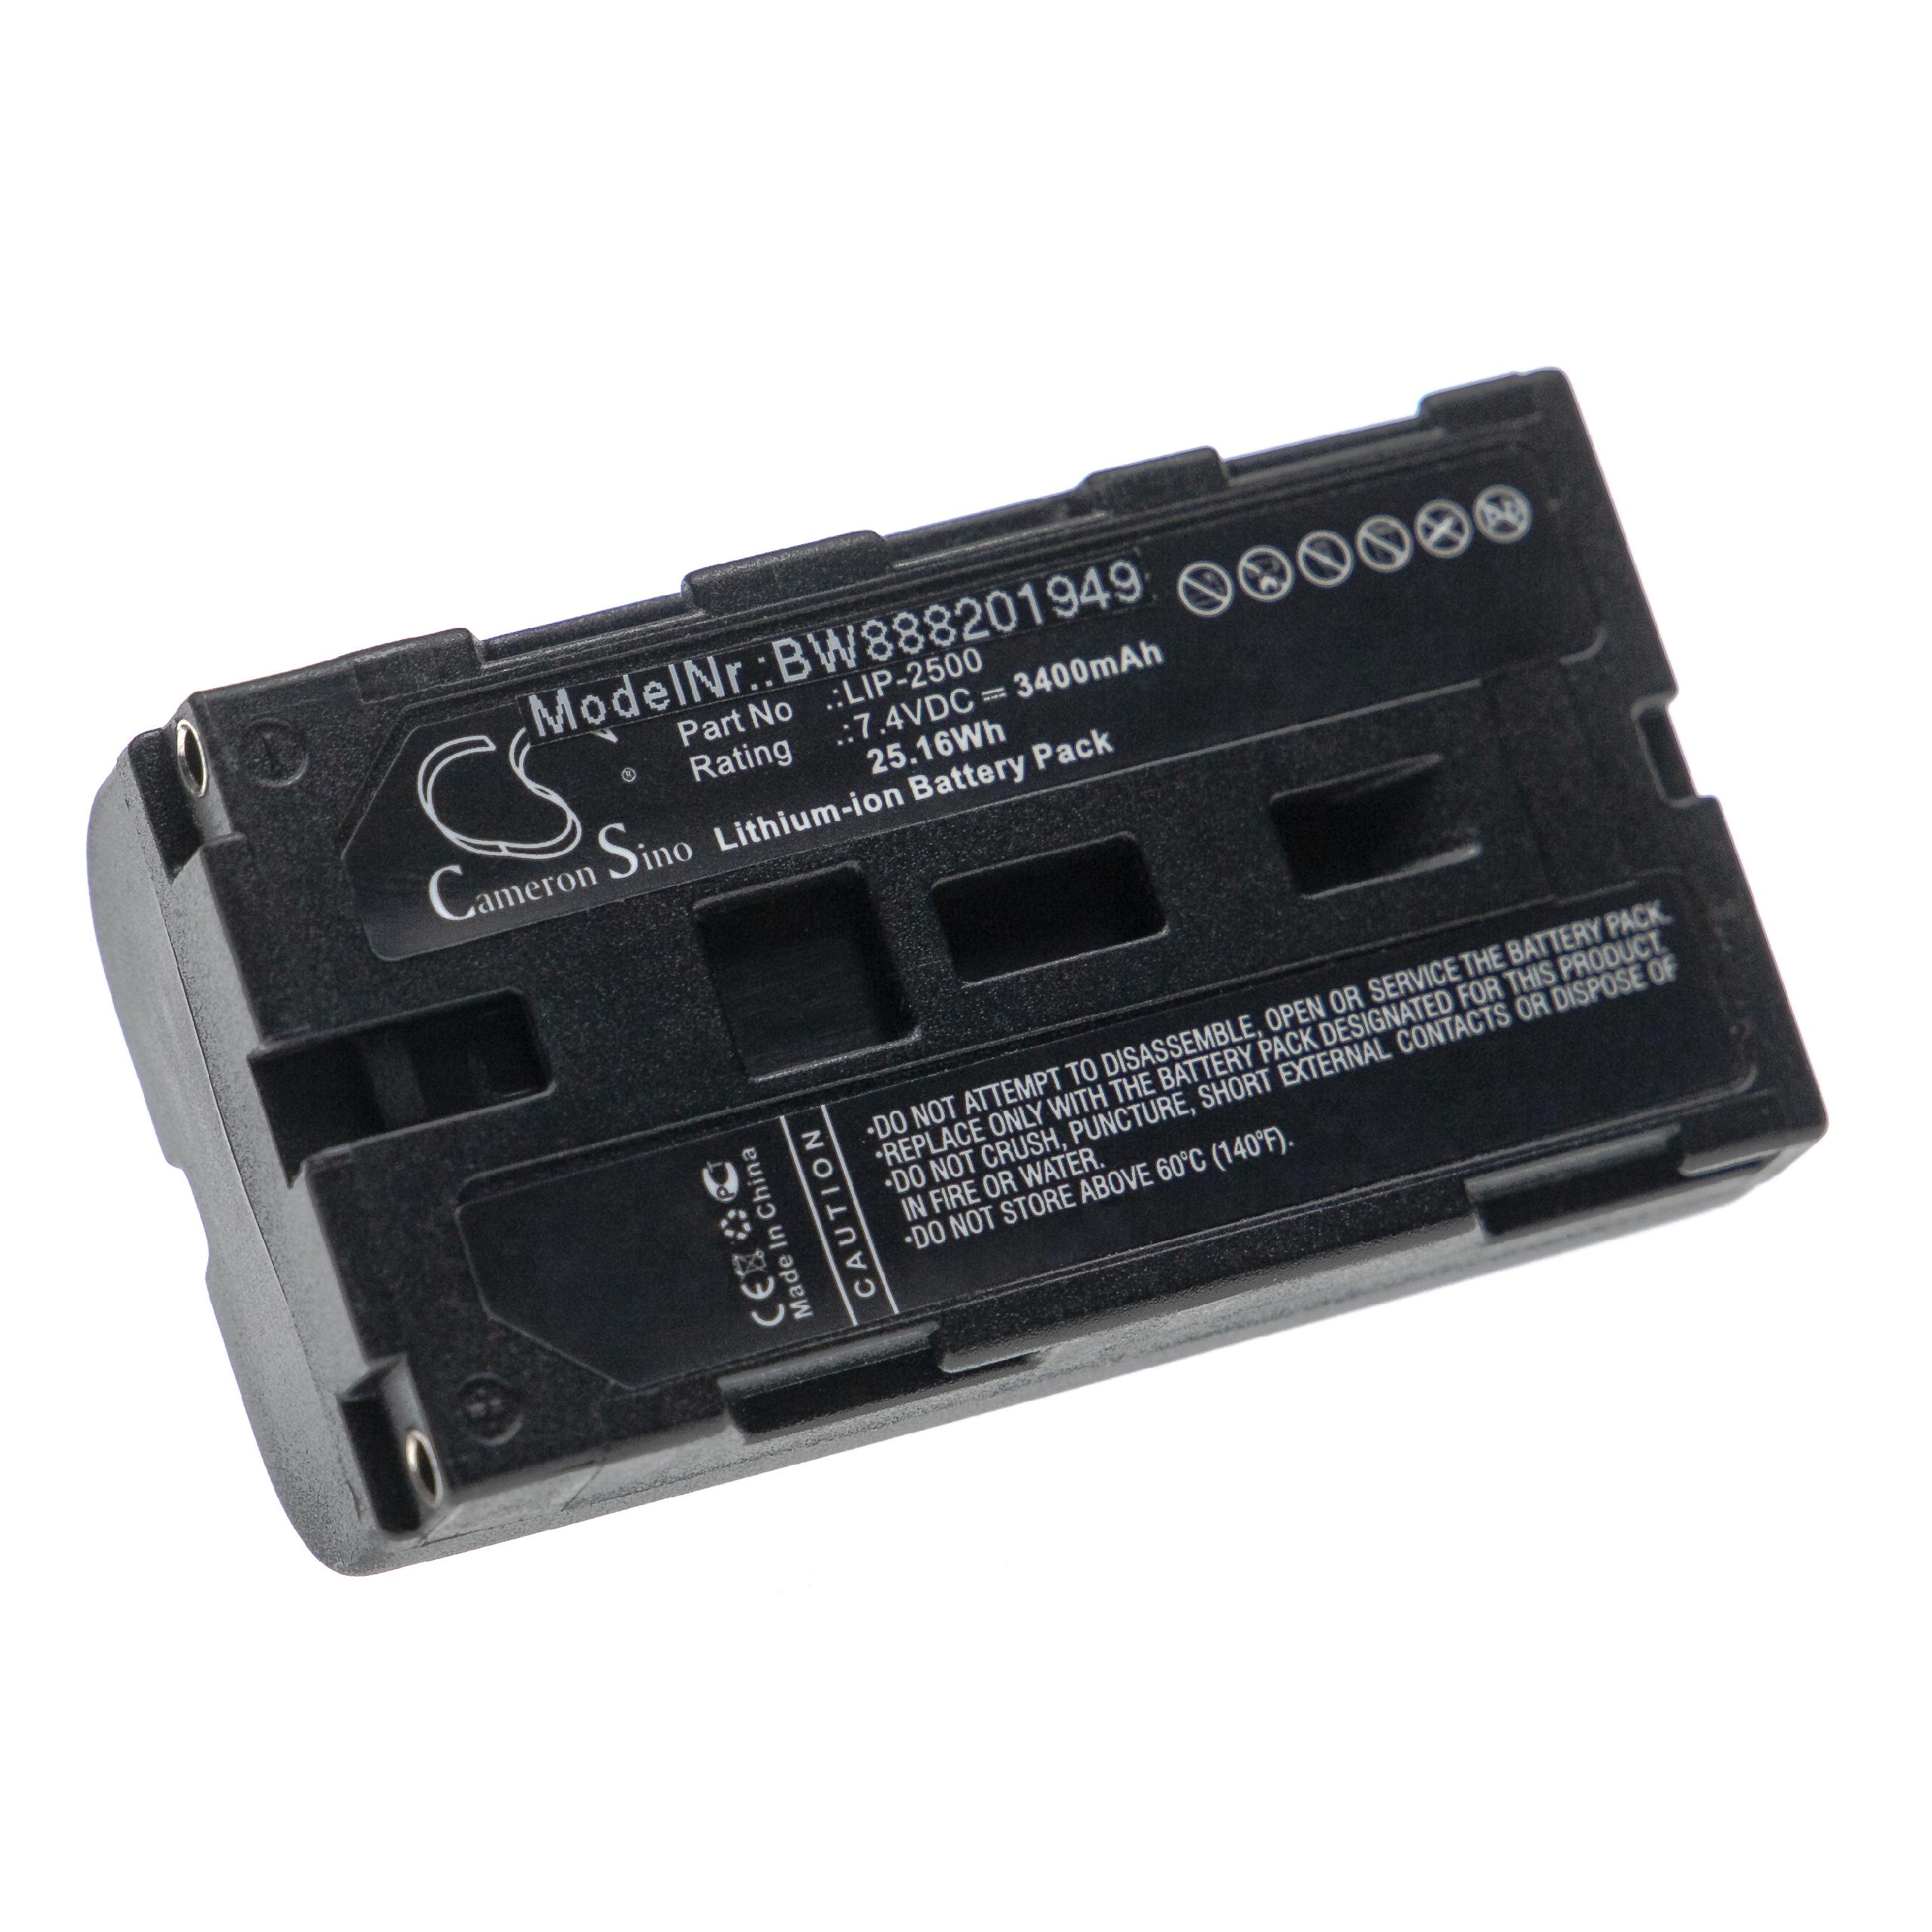 Batería reemplaza Epson C32C831091, LIP-2500, NP-500, NP-500H para impresora Epson - 3400 mAh 7,4 V Li-Ion